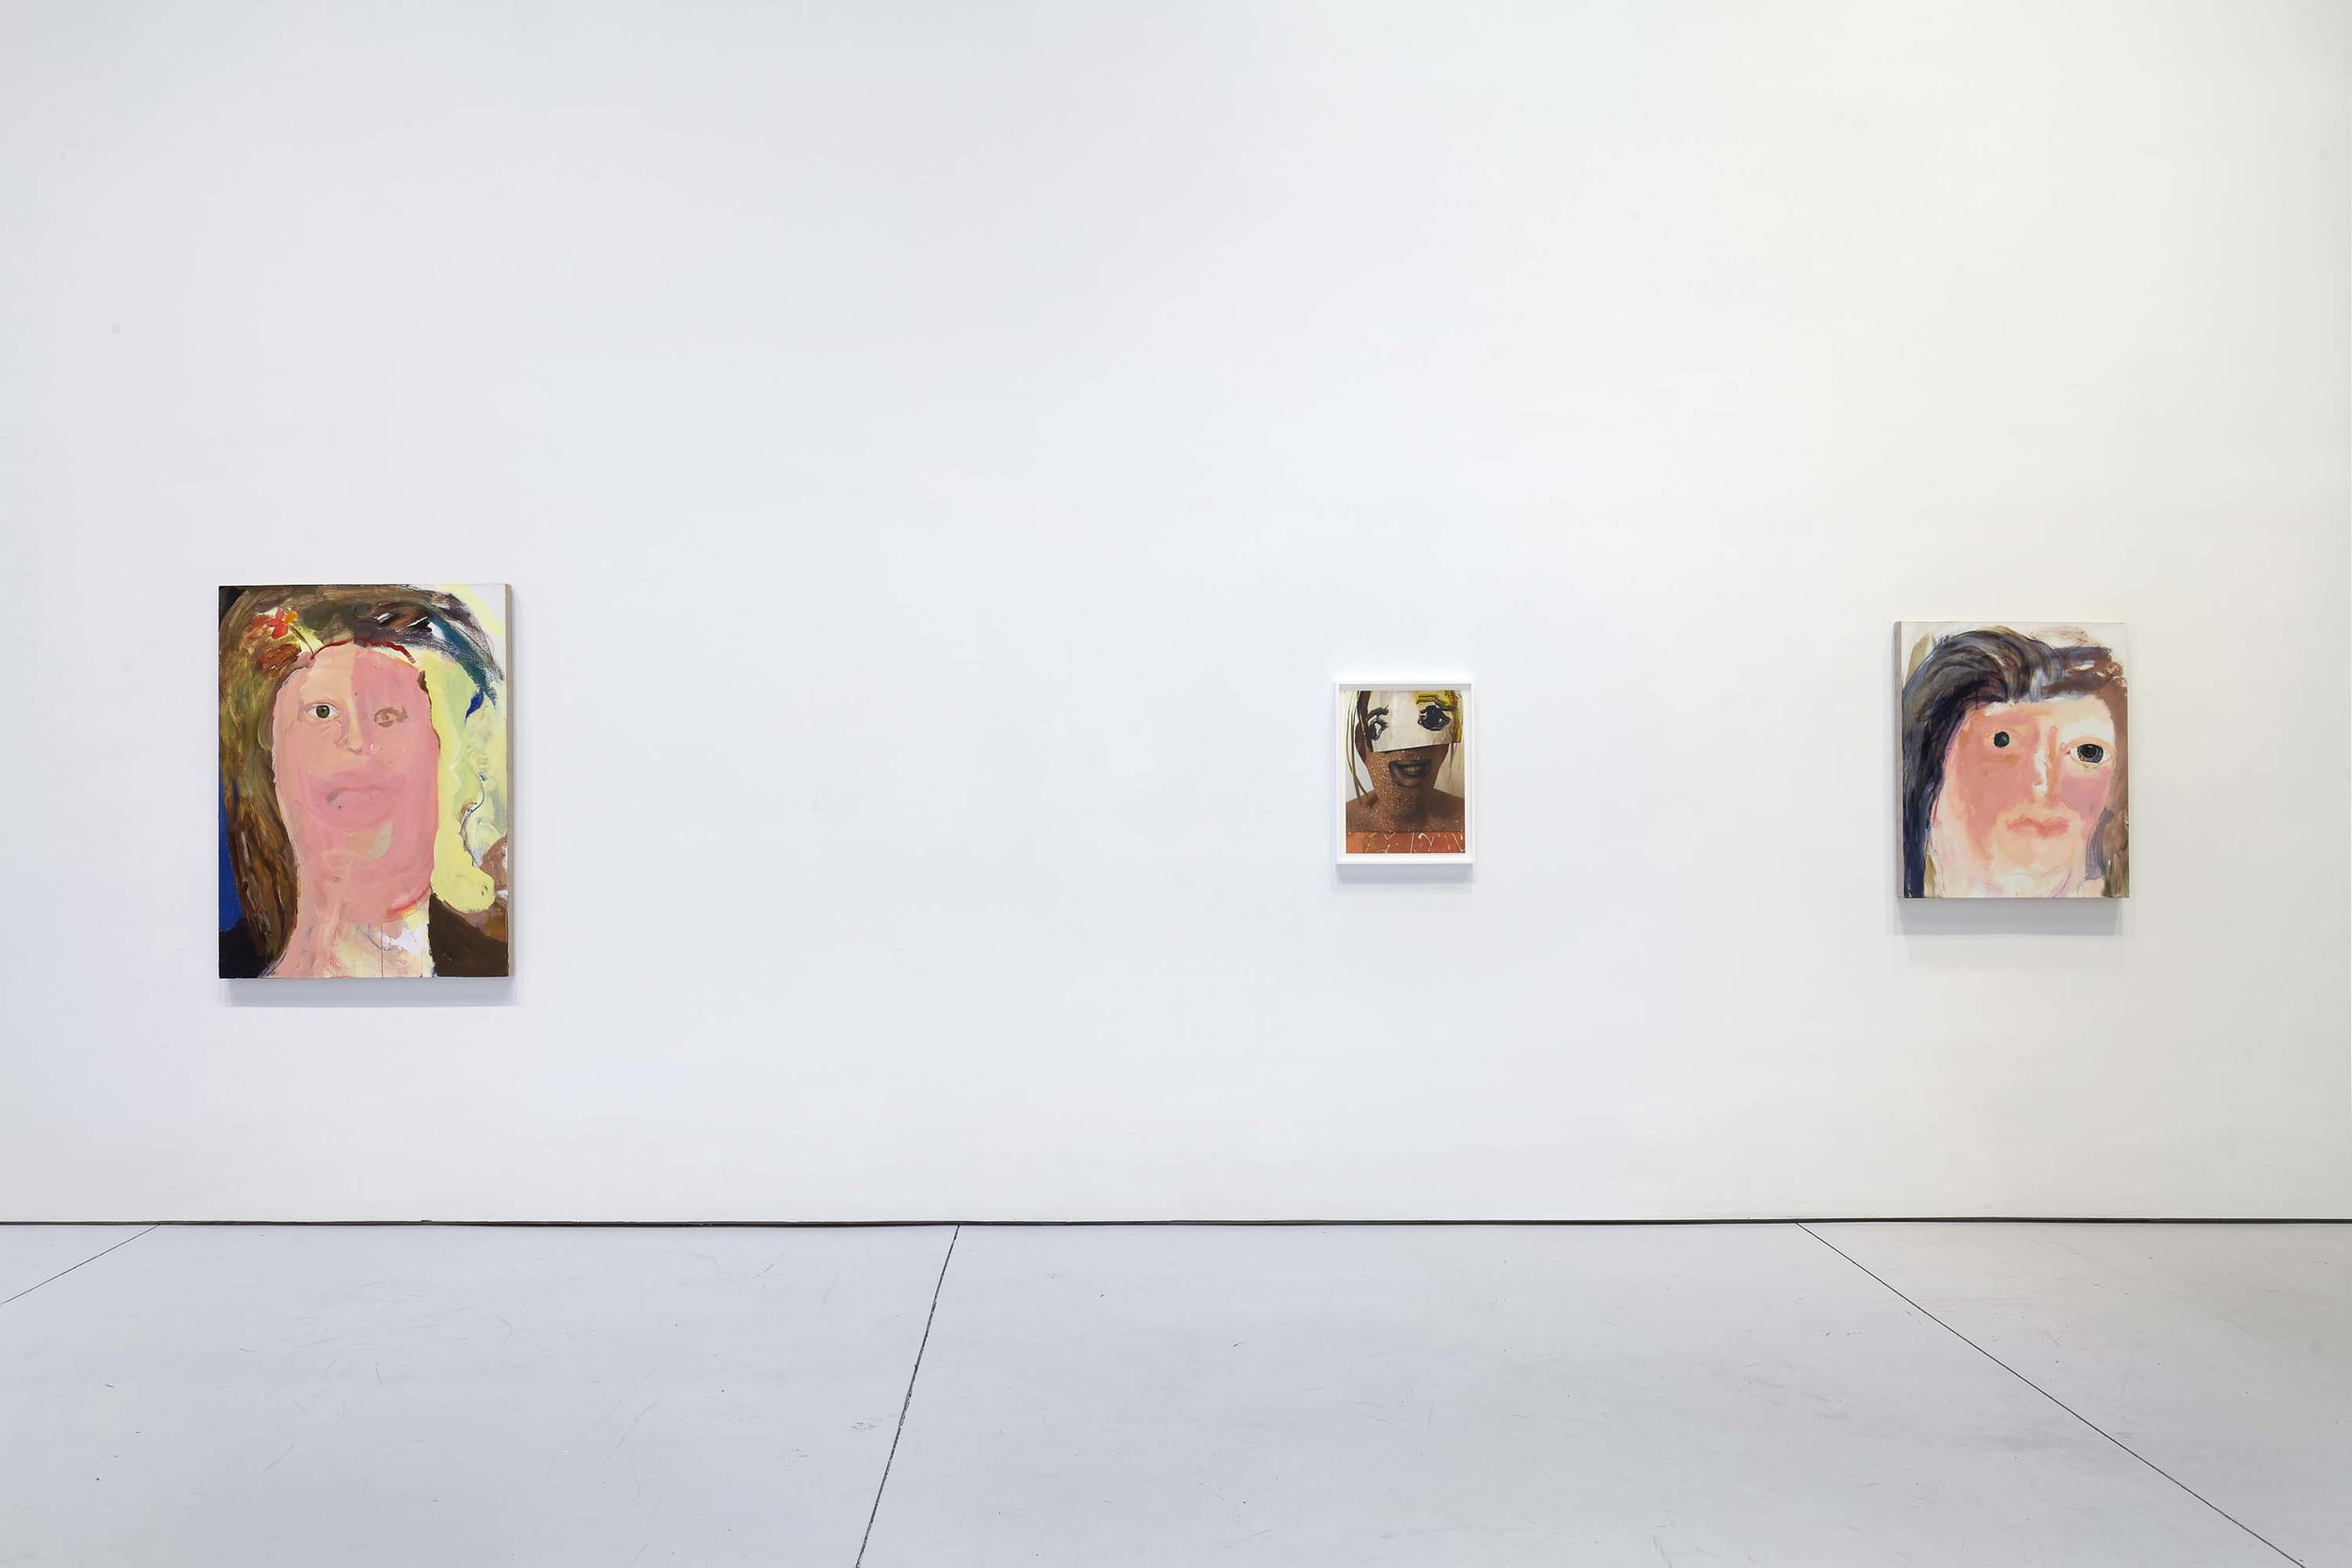  Margot Bergman, “Family Album,” installation view, 2019, courtesy of the artist and Anton Kern Gallery 